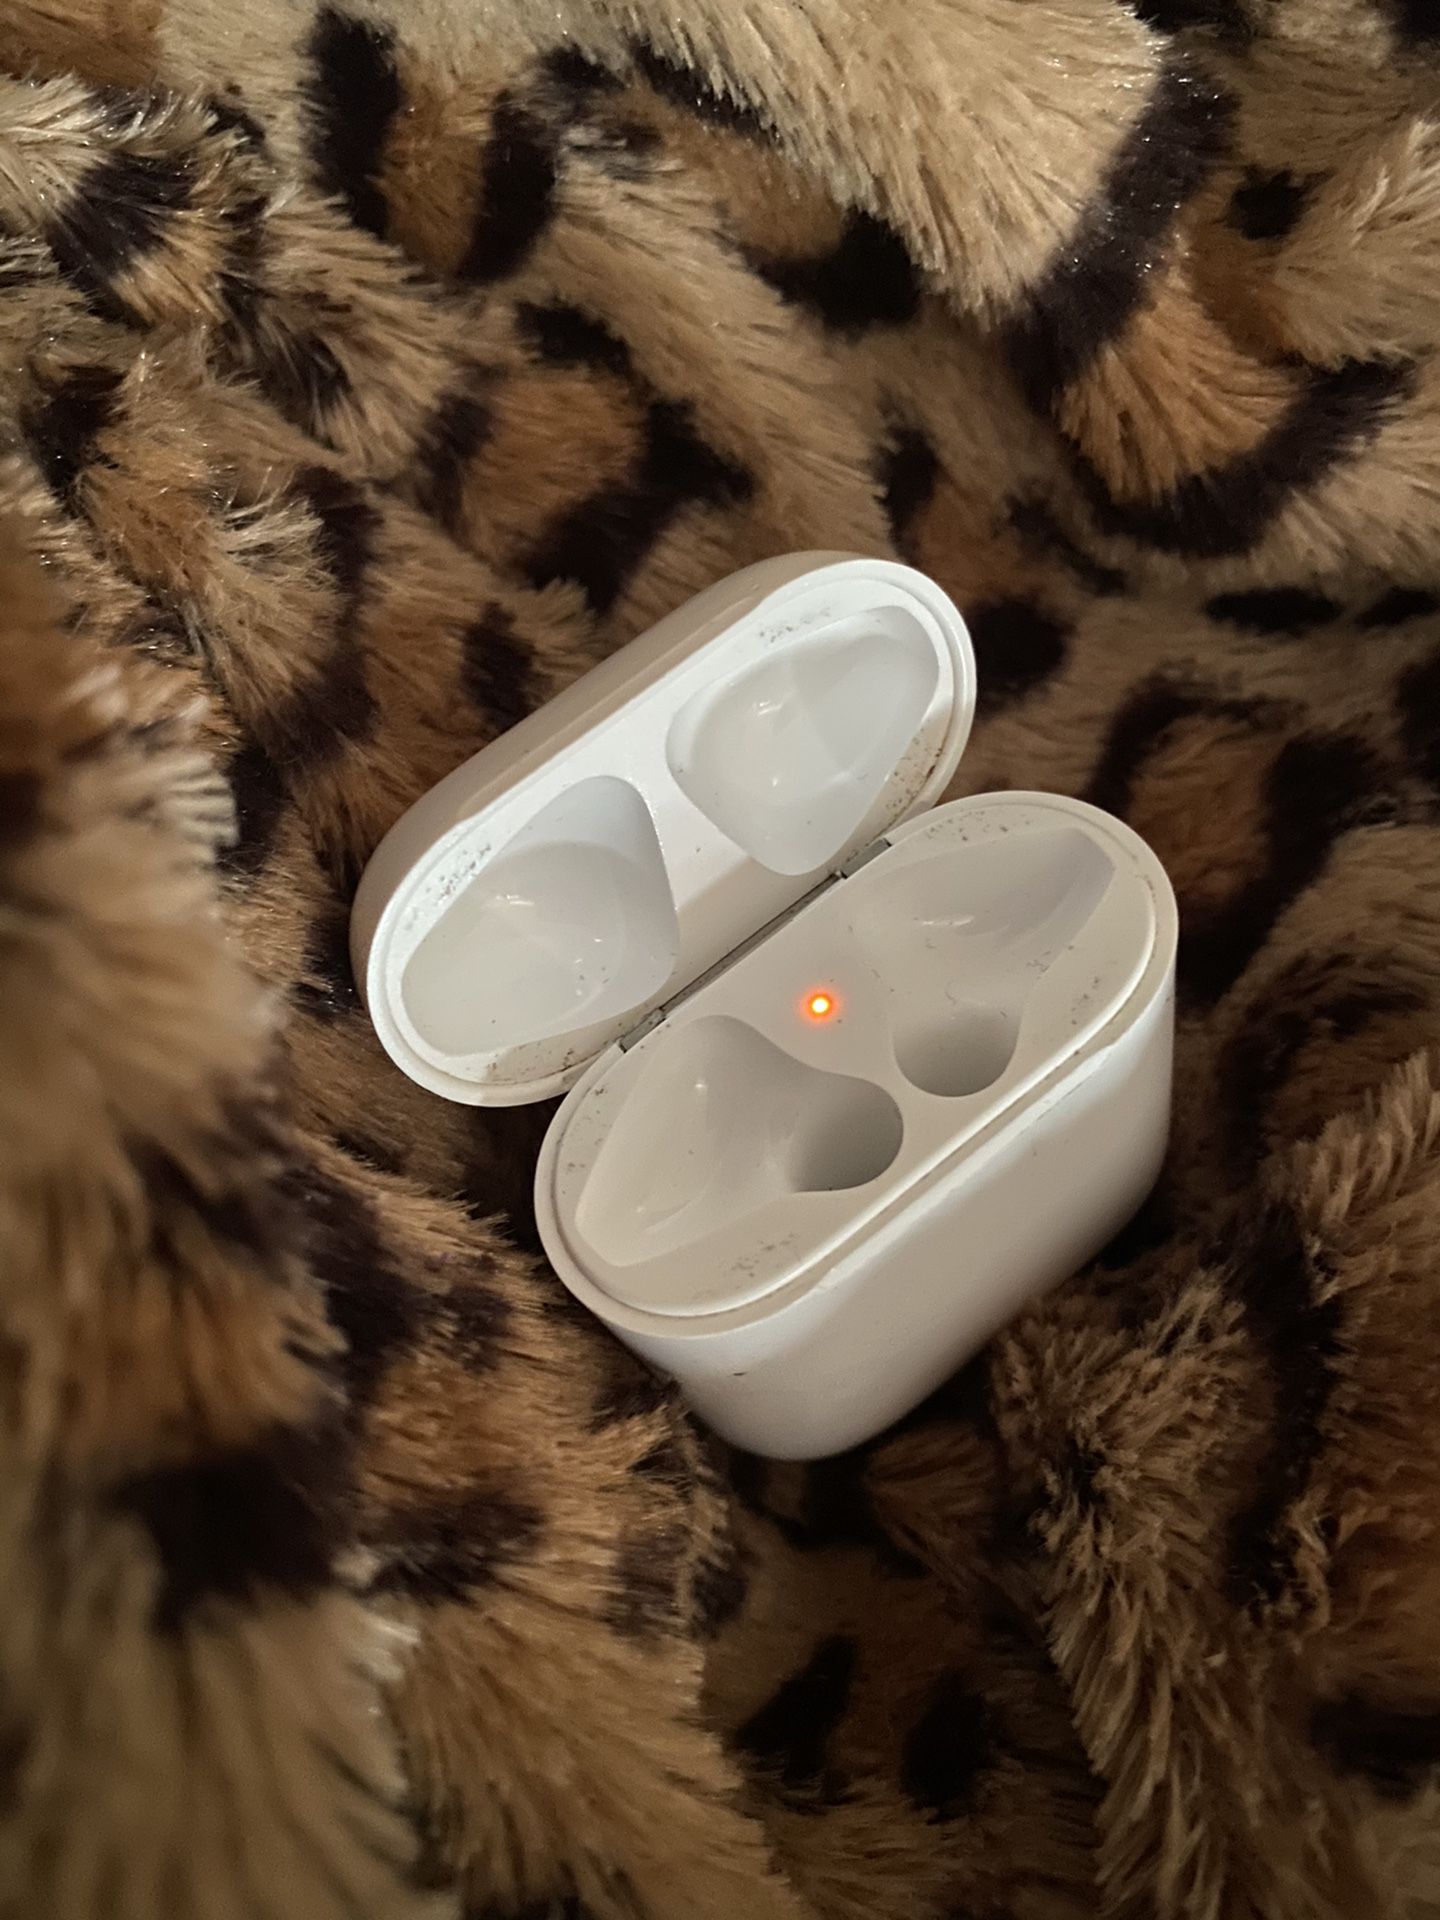 Apple AirPod Case (no headphones)